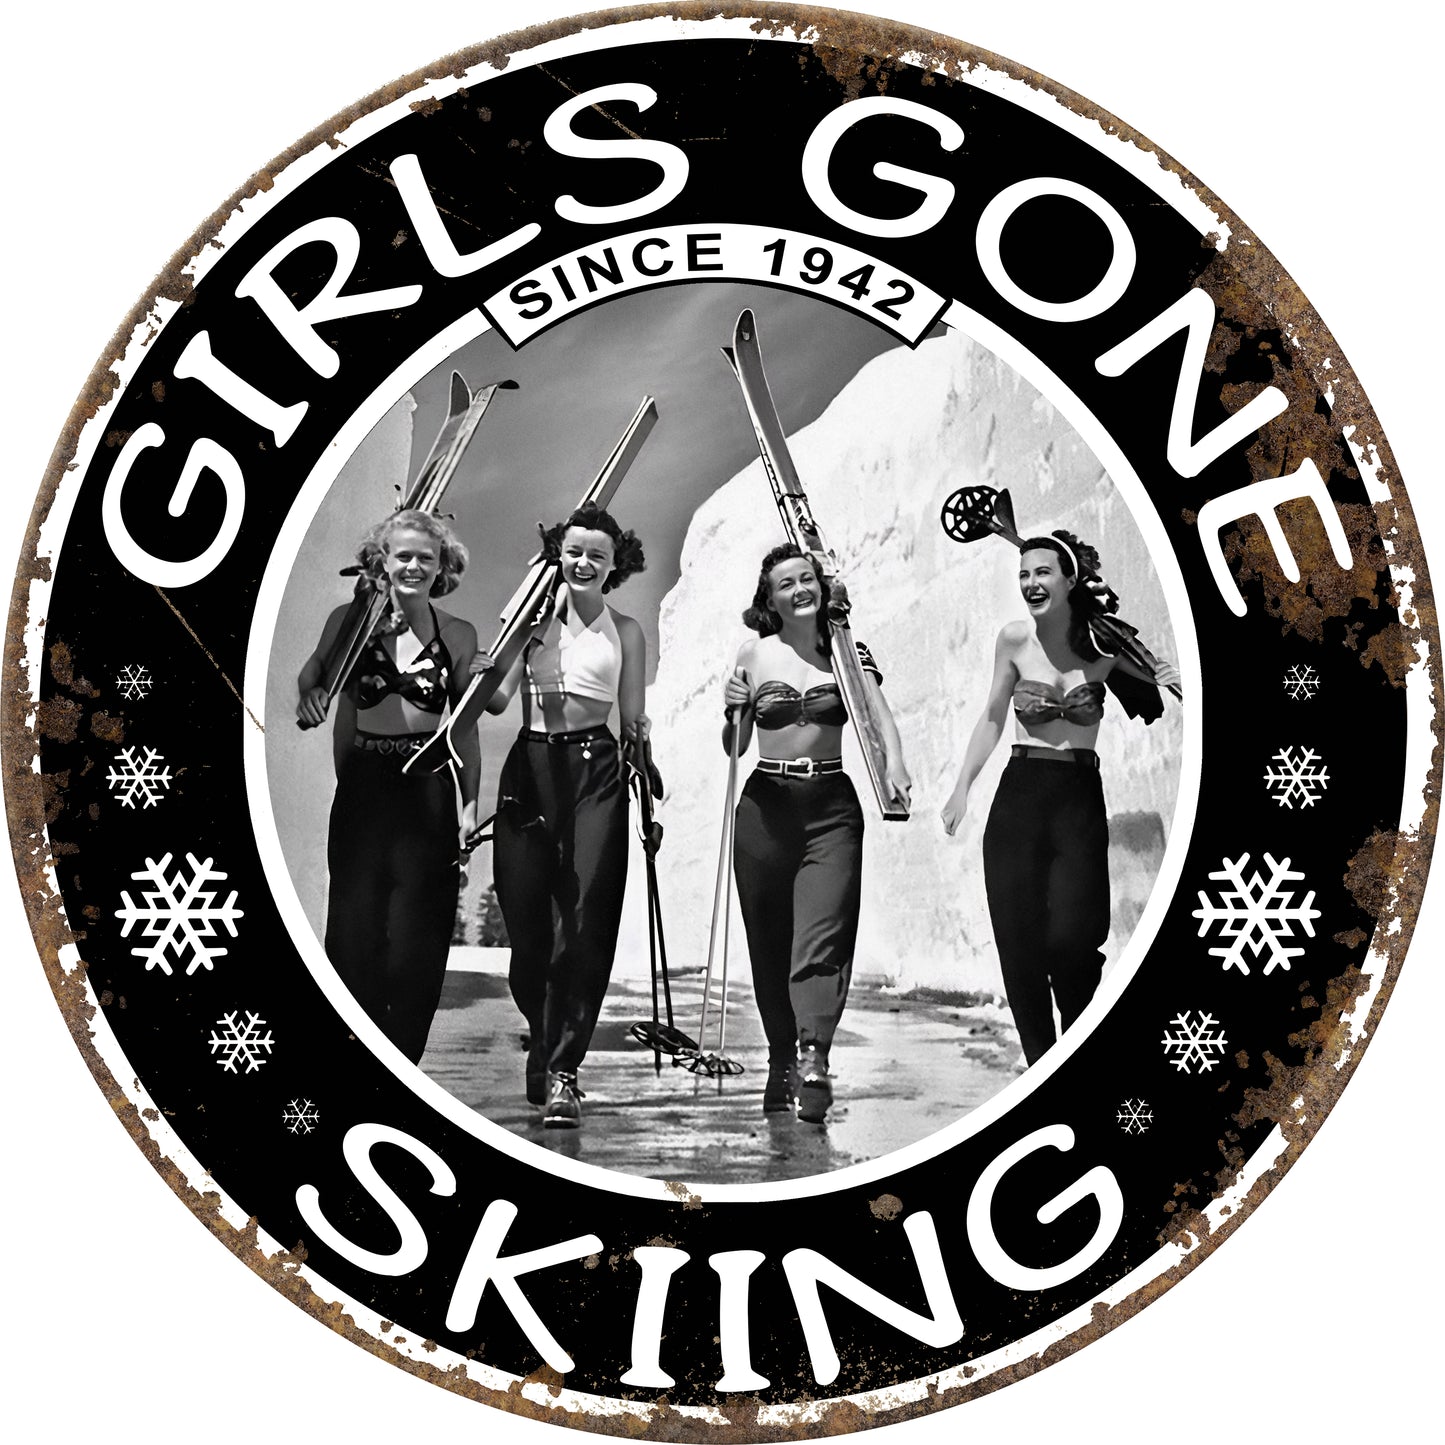 NEW Circular Girls Gone Skiing Sign 16"!